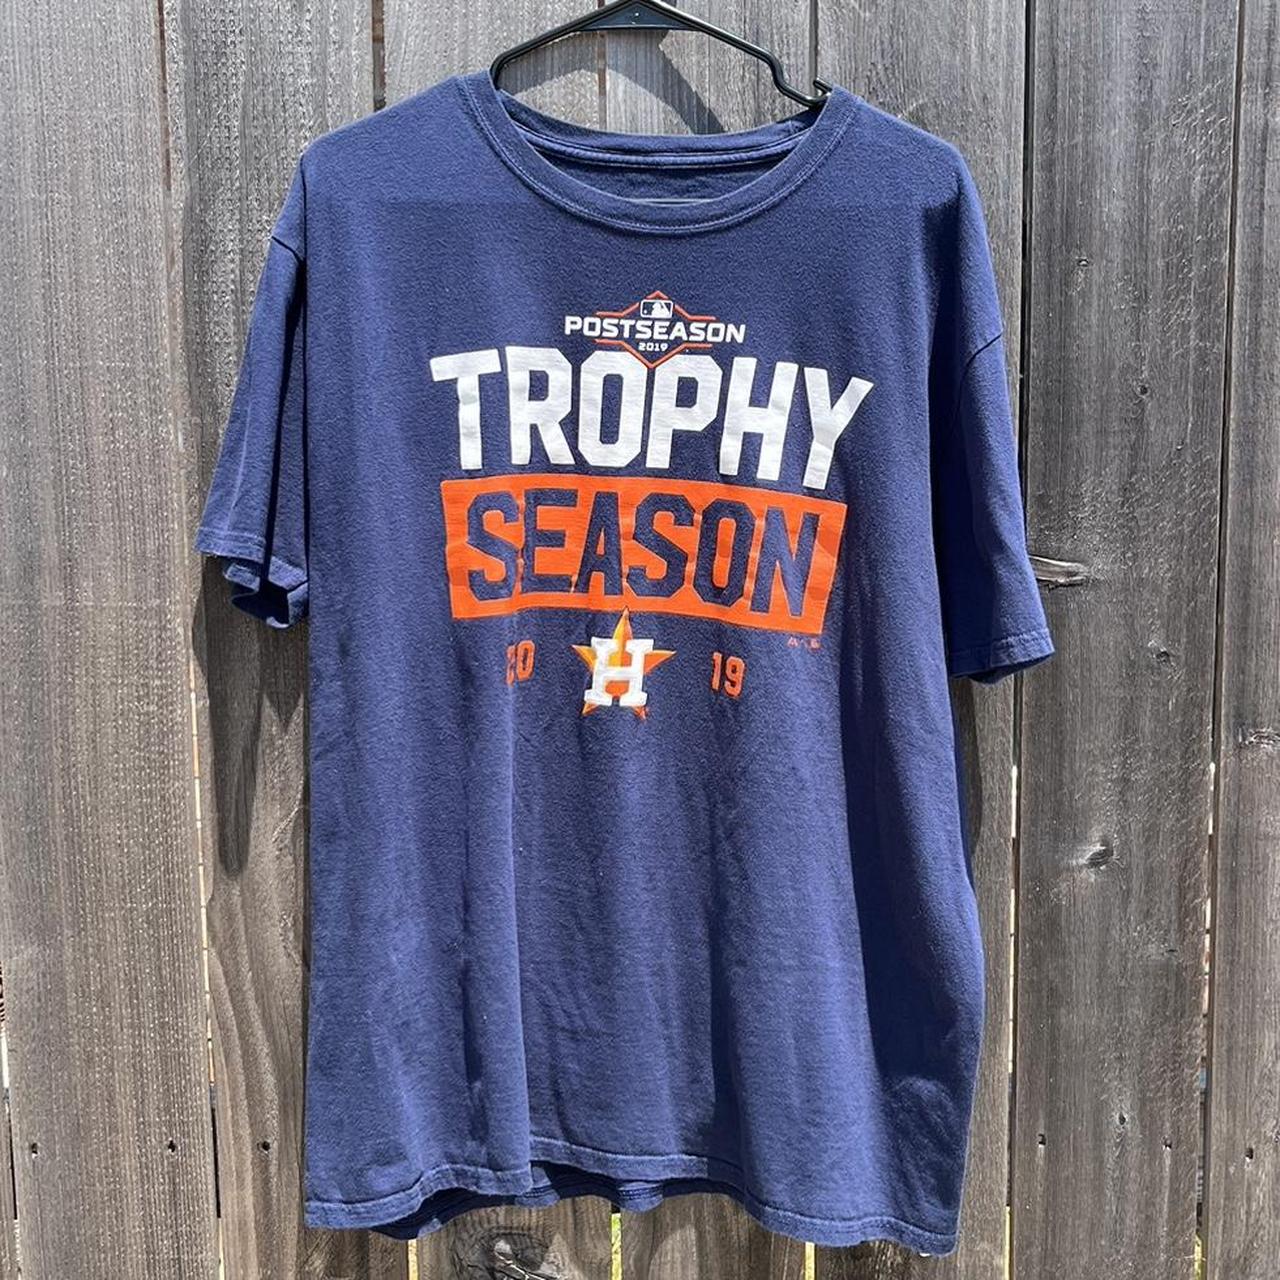 MLB Men's T-Shirt - Navy - XL